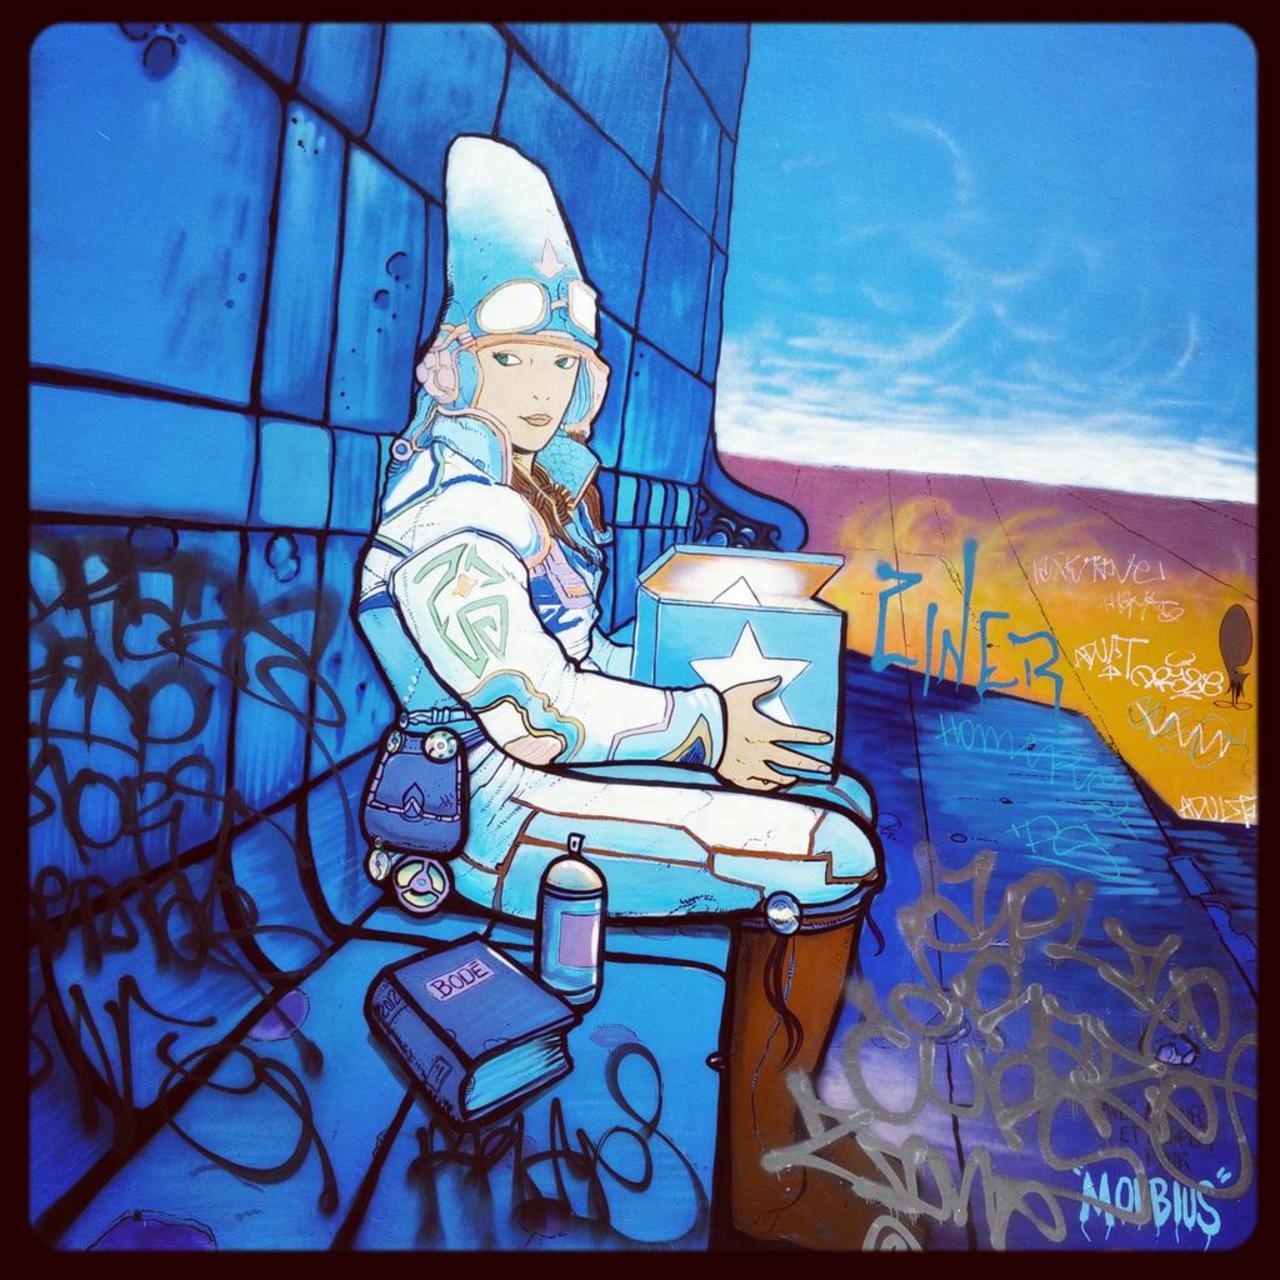 Great #moebius tribute by Bode, Stan 153 and Cuba. #streetart #art #wall #mural #sanfrancisco #sf #graffiti http://t.co/xr9kNFn1UU